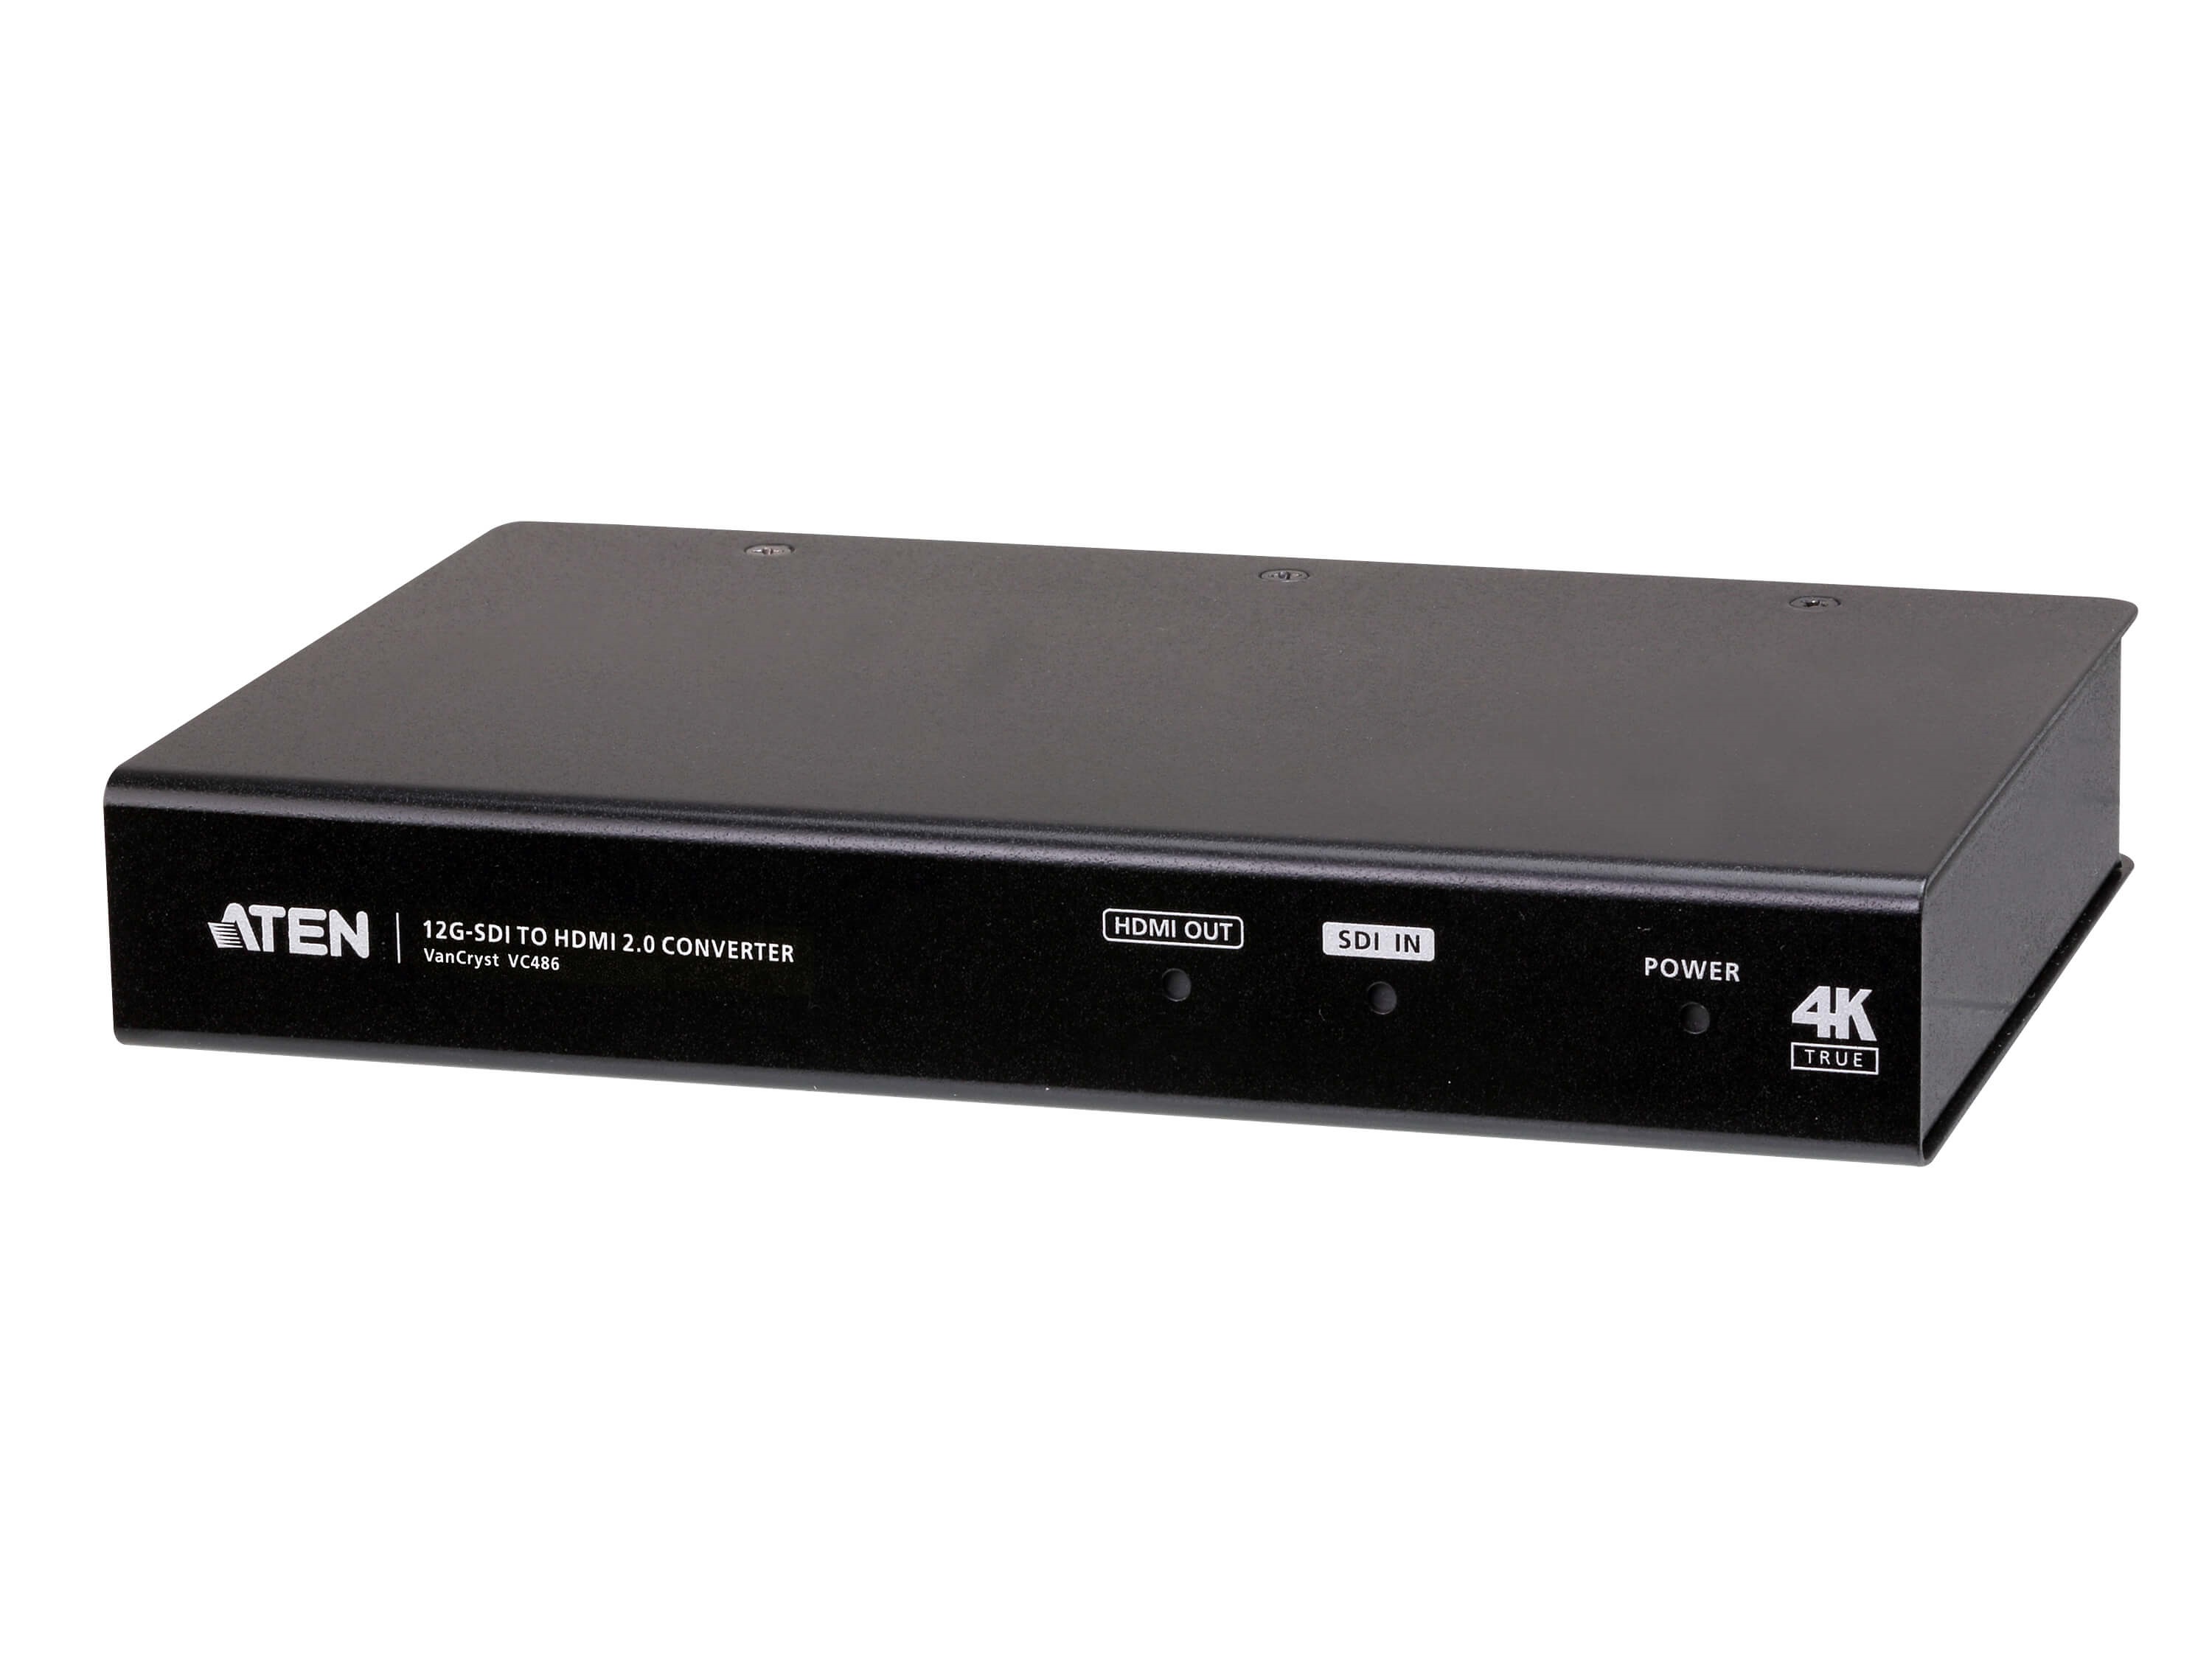 VC486 12G-SDI to HDMI Converter by Aten